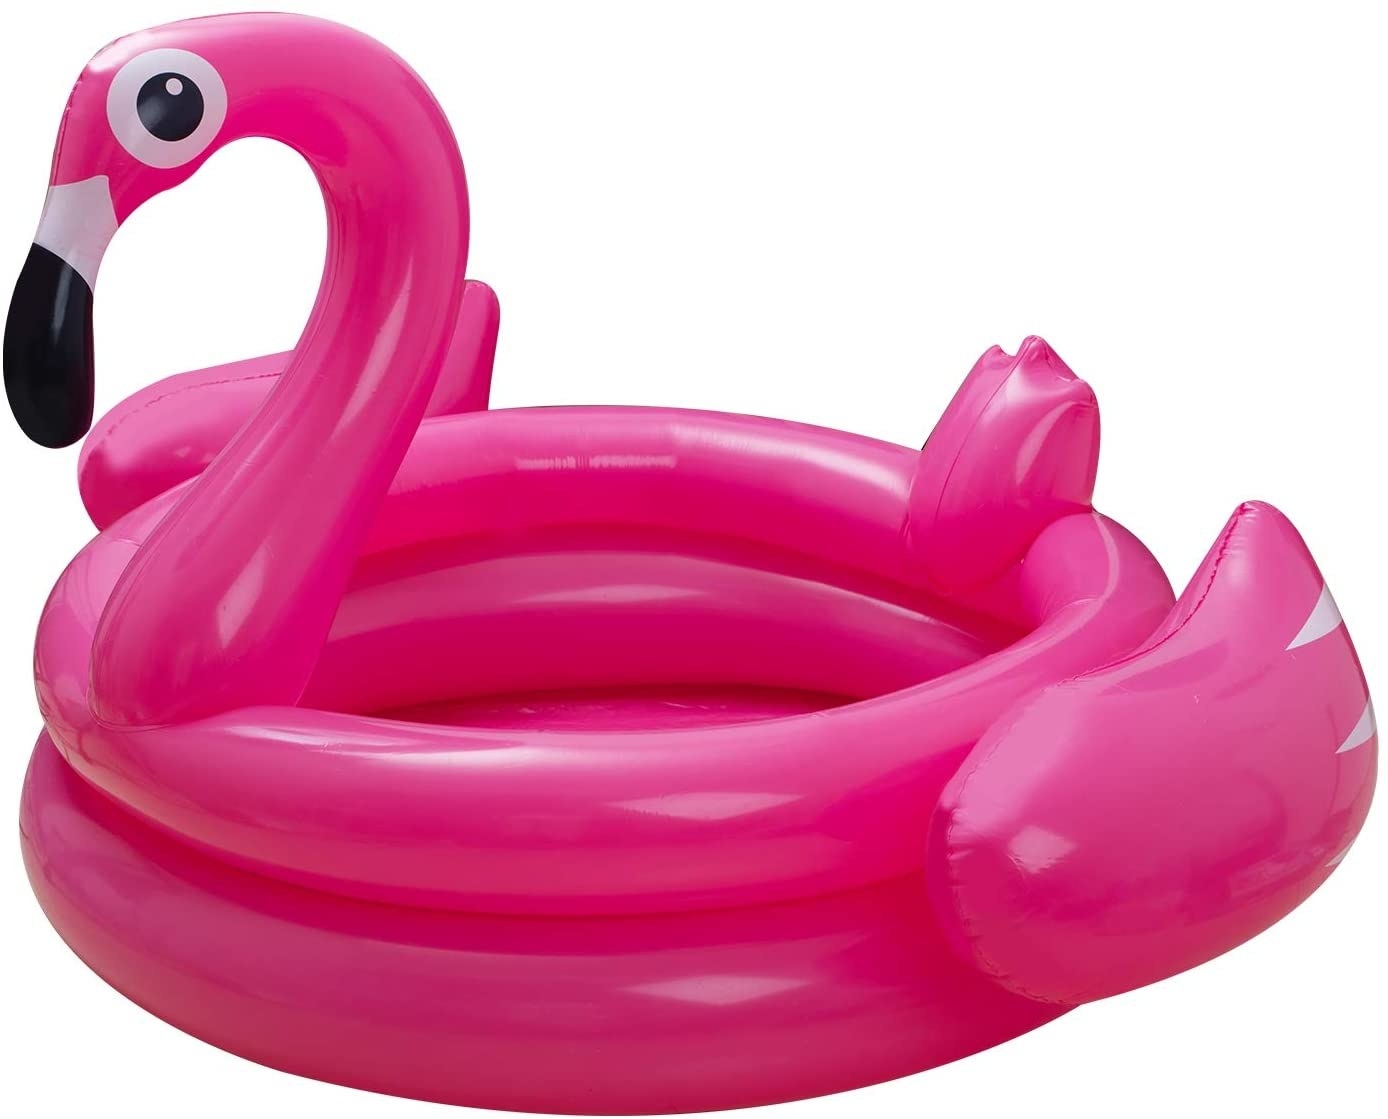 A circular flamingo-shaped pool